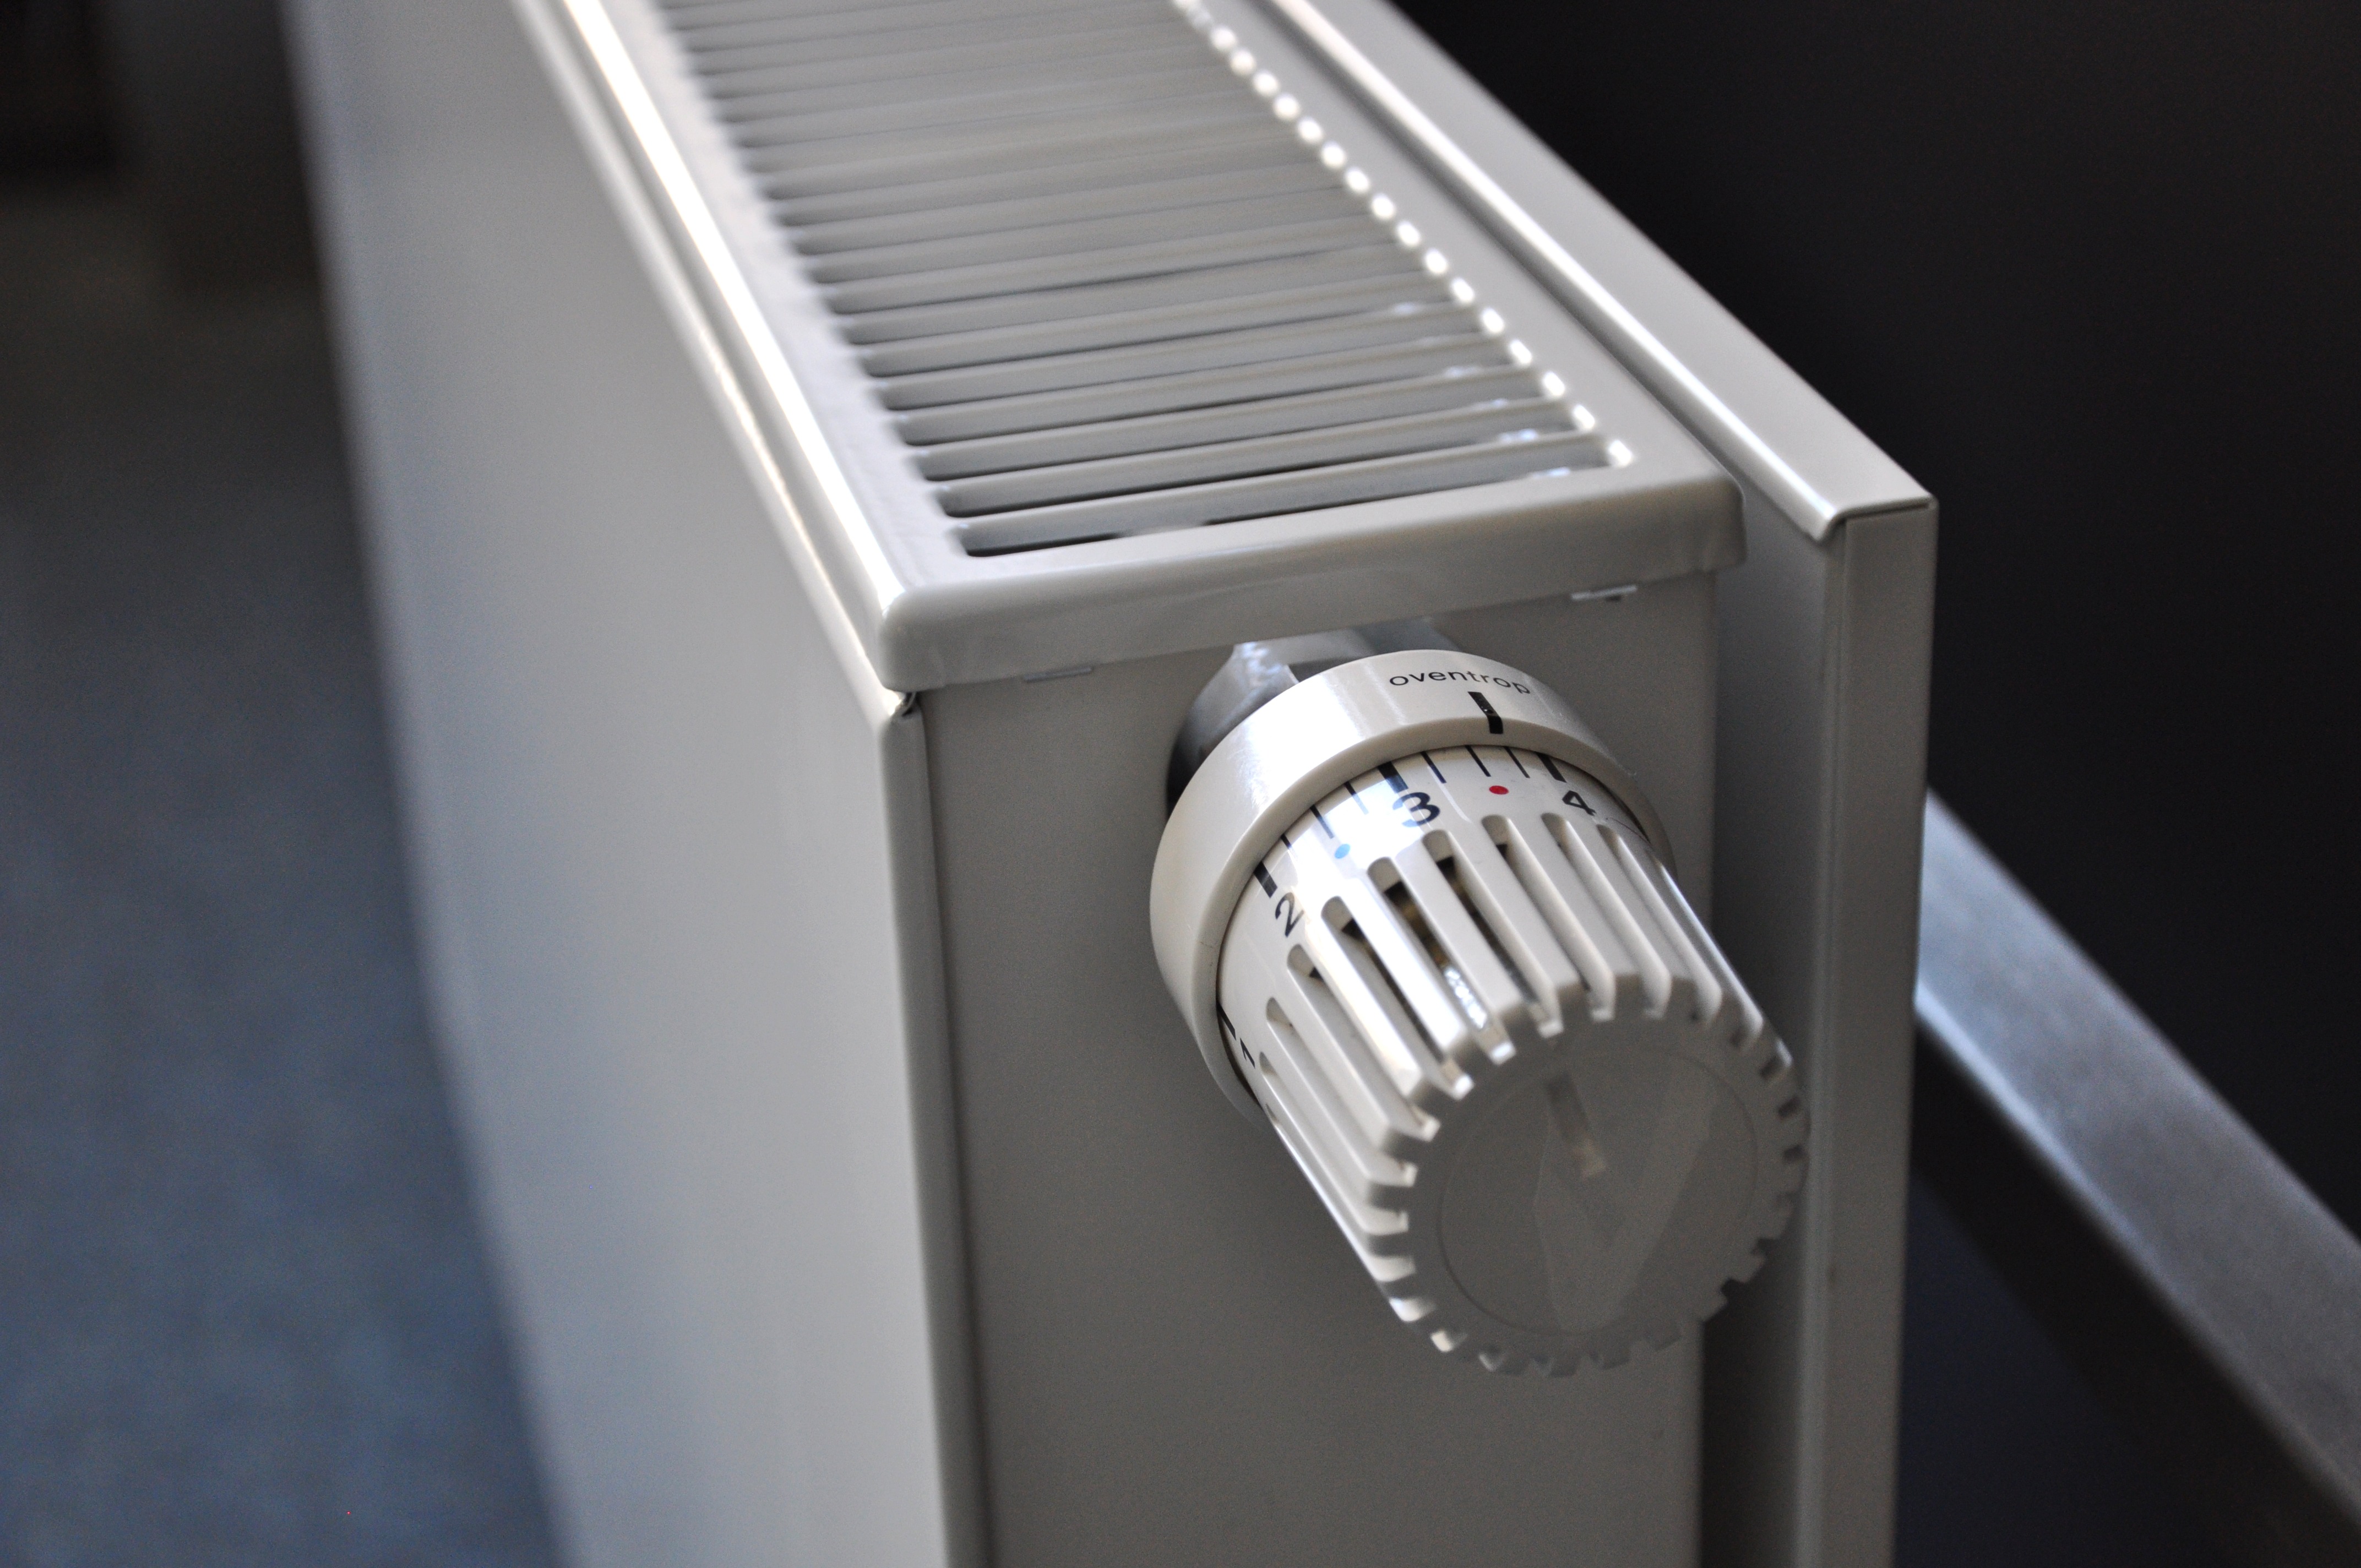 cold-light-lighting-heat-product-hot-radiator-heating-temperature-thermostat-flat-radiators-994596.jpg